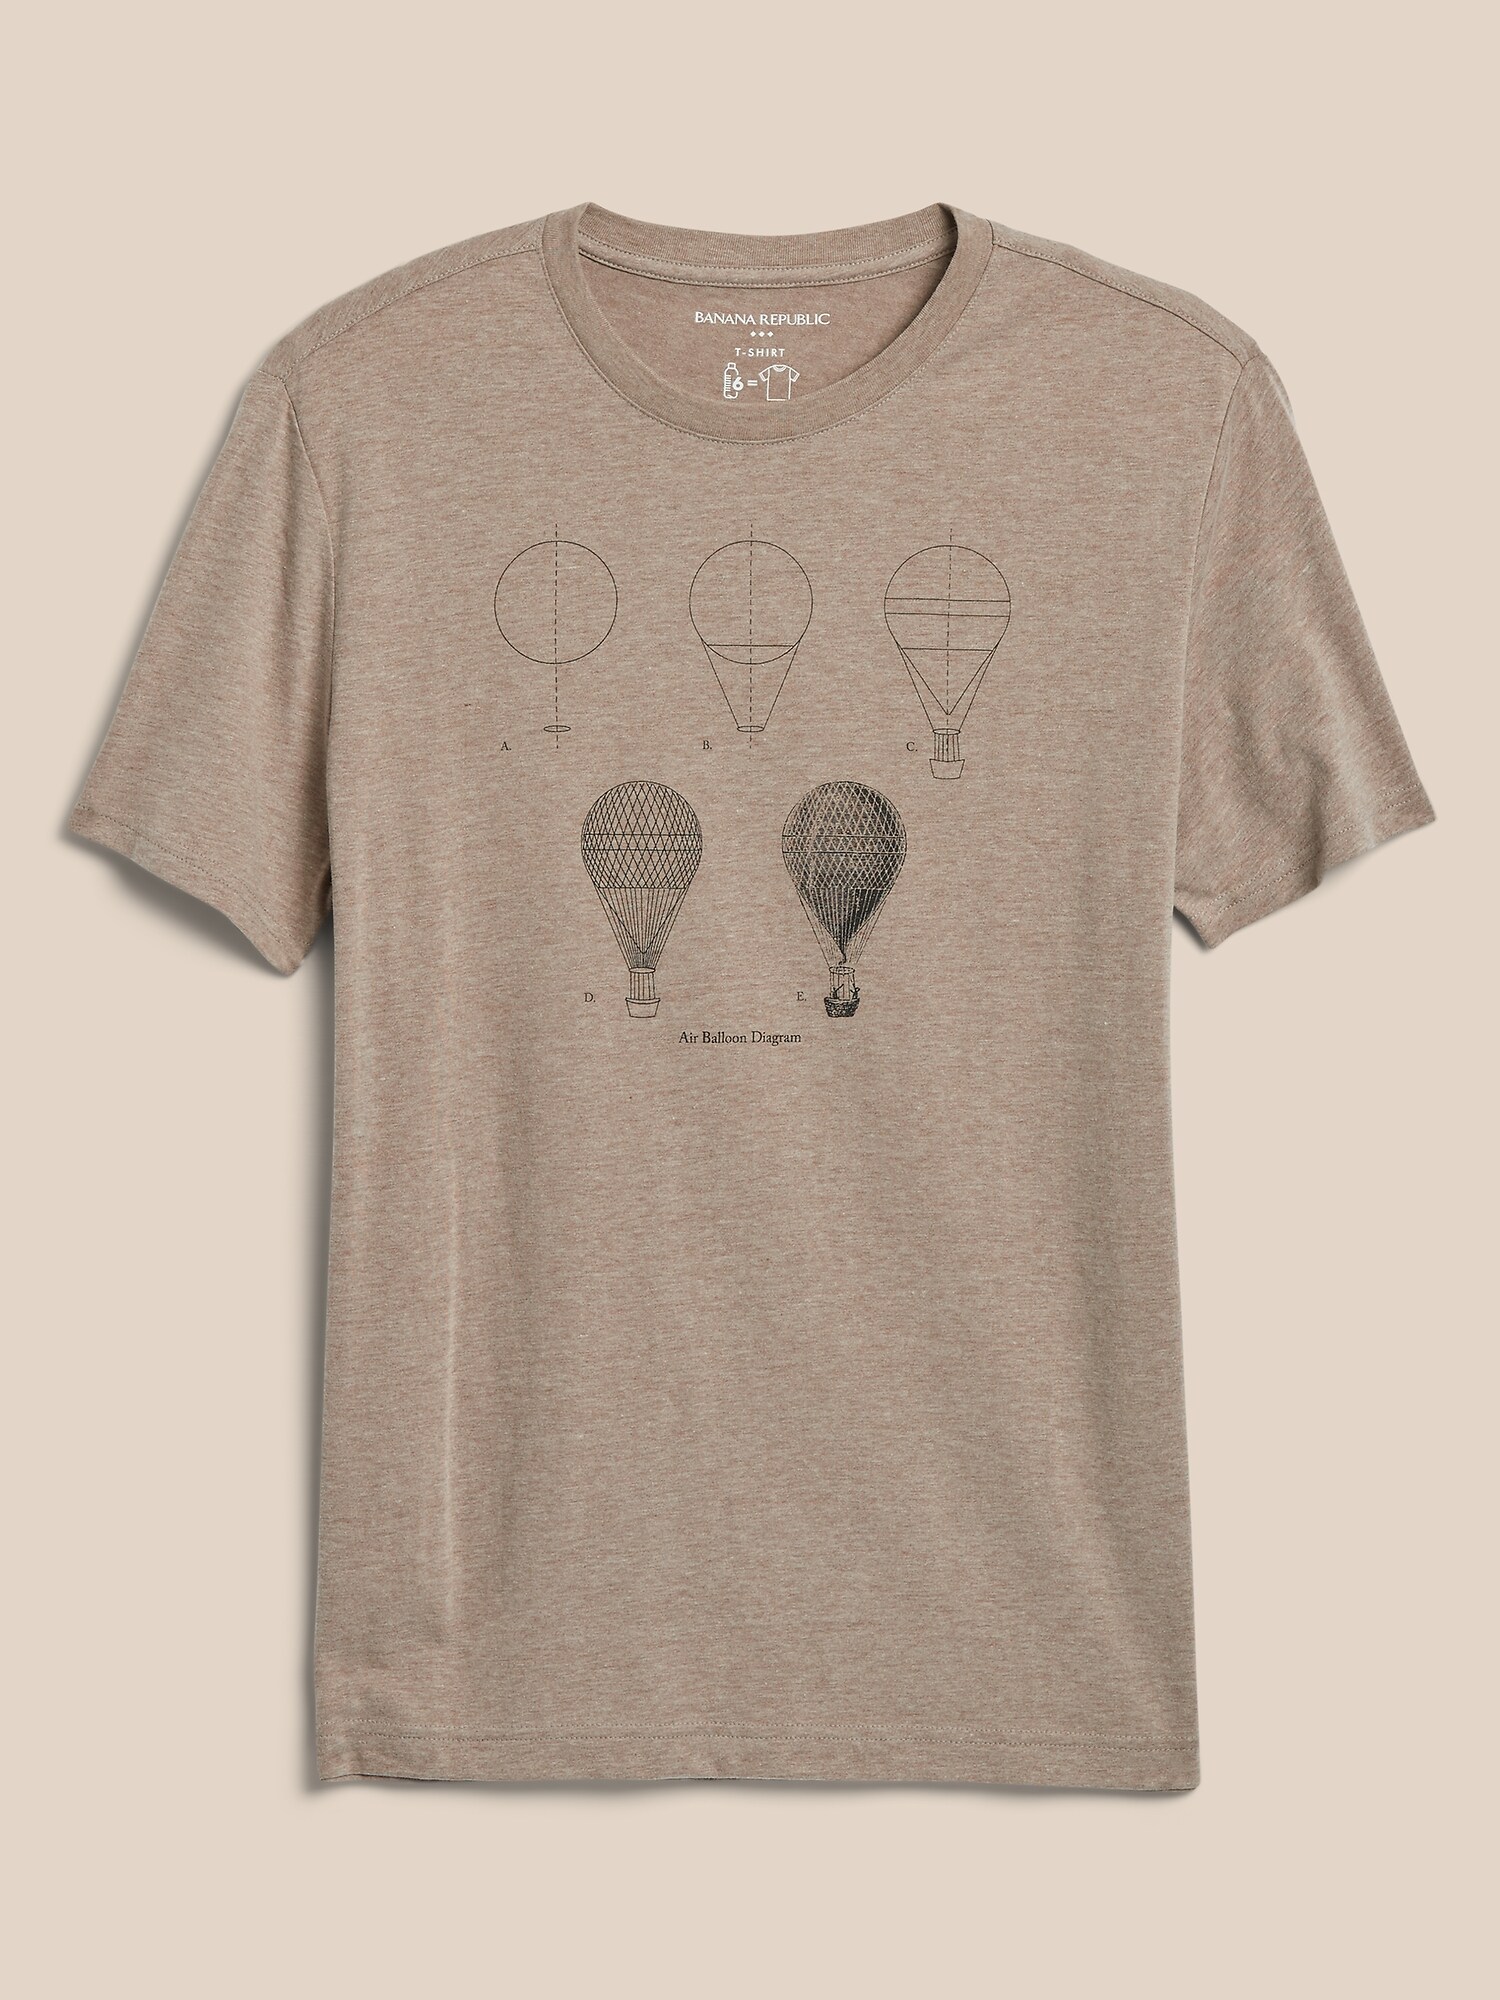 Balloon Sketch Graphic T-Shirt